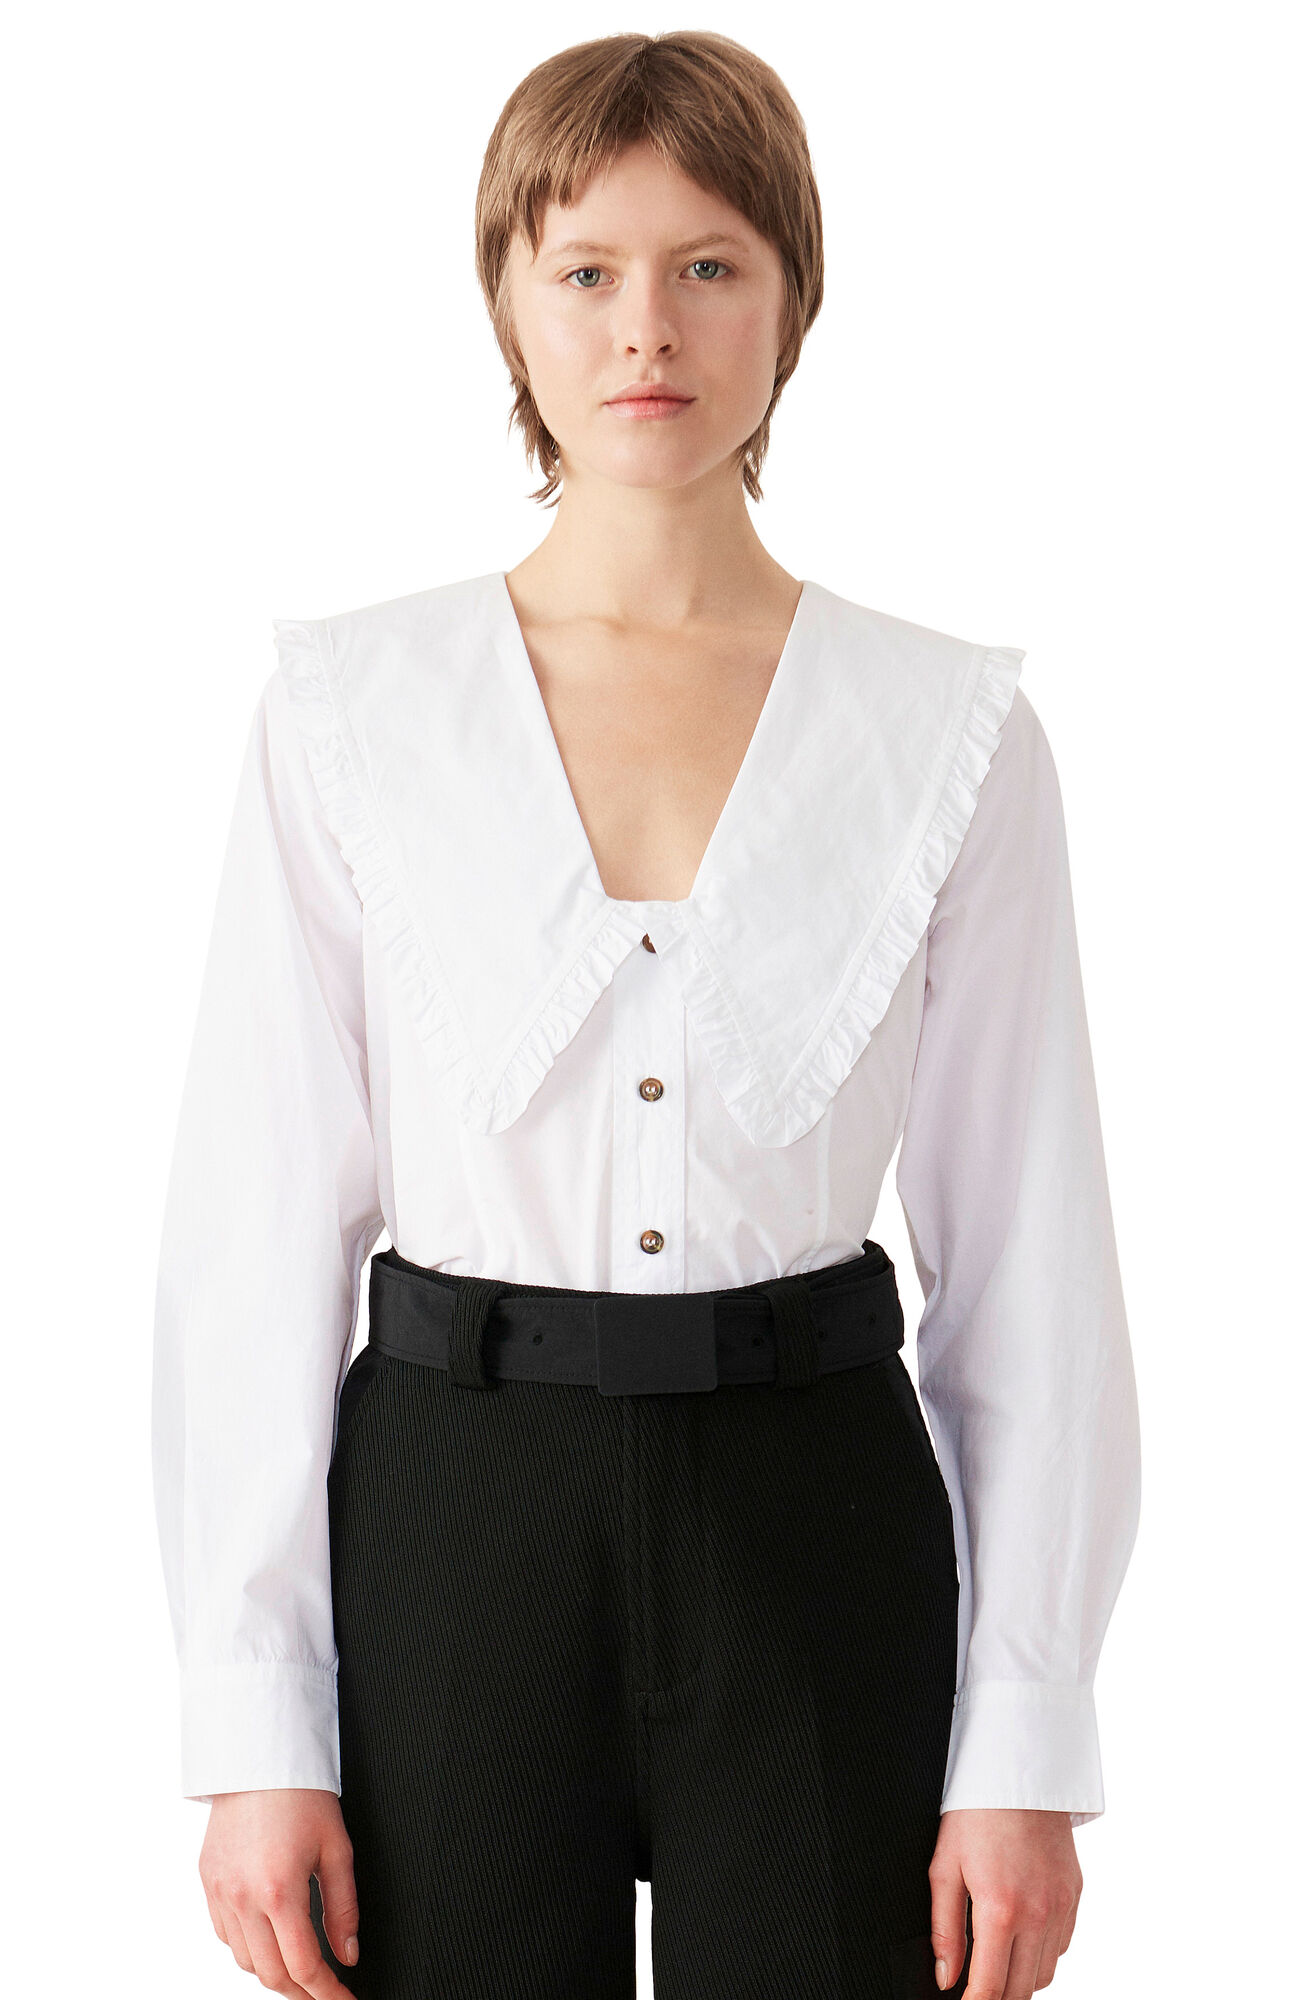 Ruffled Drop Shoulder Skjorte, Cotton, in colour Bright White - 1 - GANNI